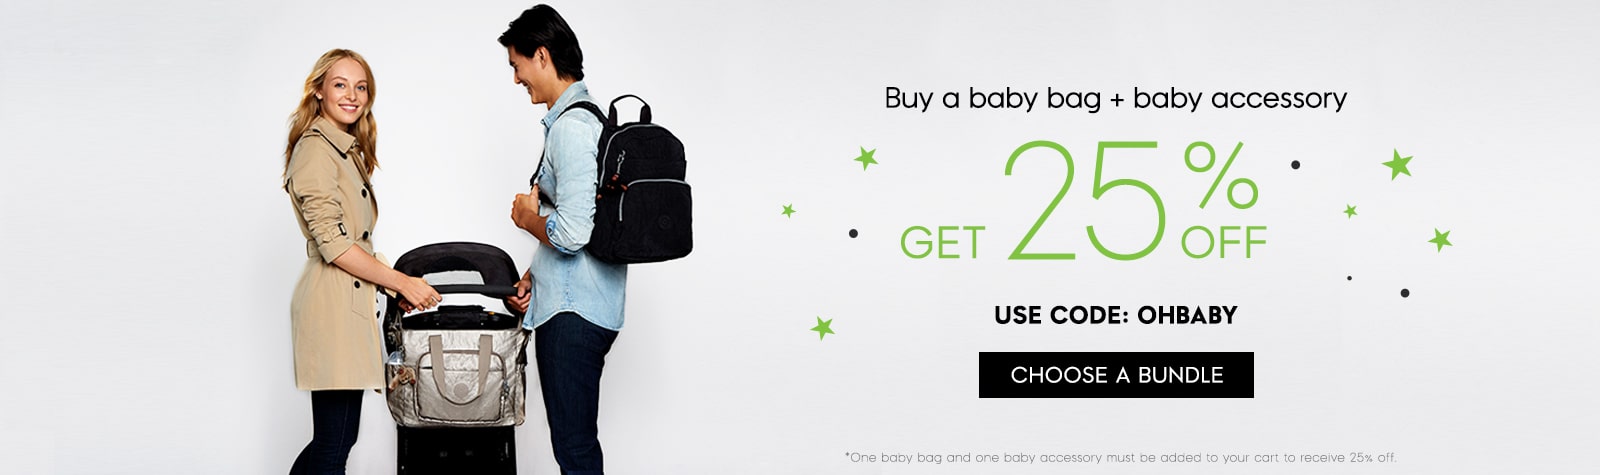 baby-bag-bundle-sale-KHP-10232018-min.jpg